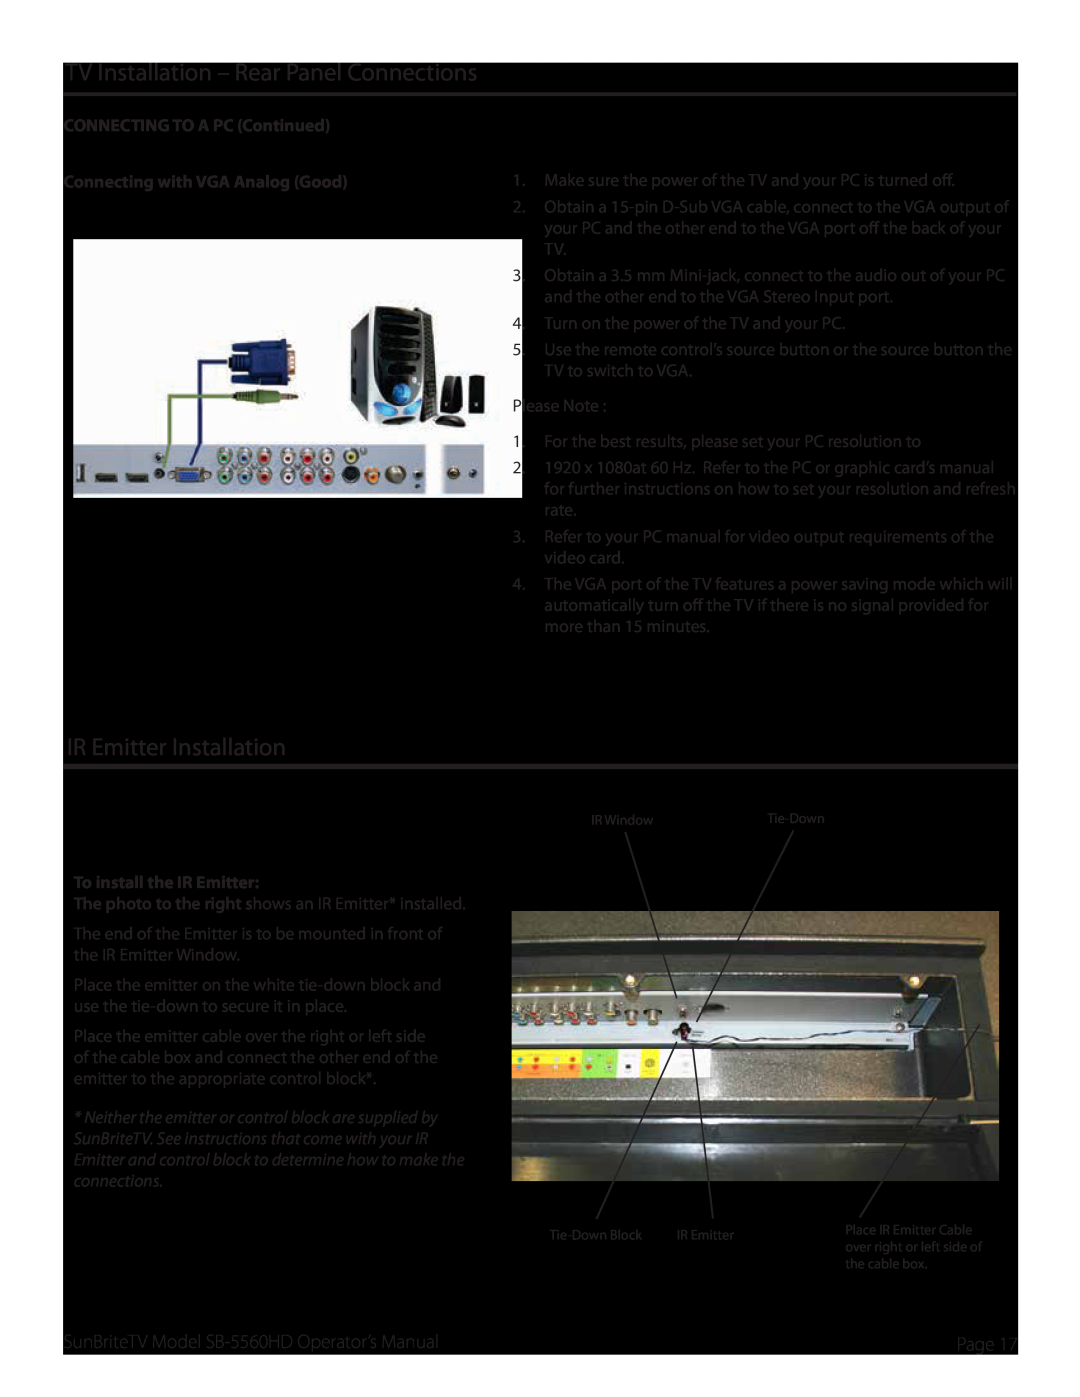 SunBriteTV SB-5560HD-BL manual IR Emitter Installation, TV Installation - Rear Panel Connections, To install the IR Emitter 